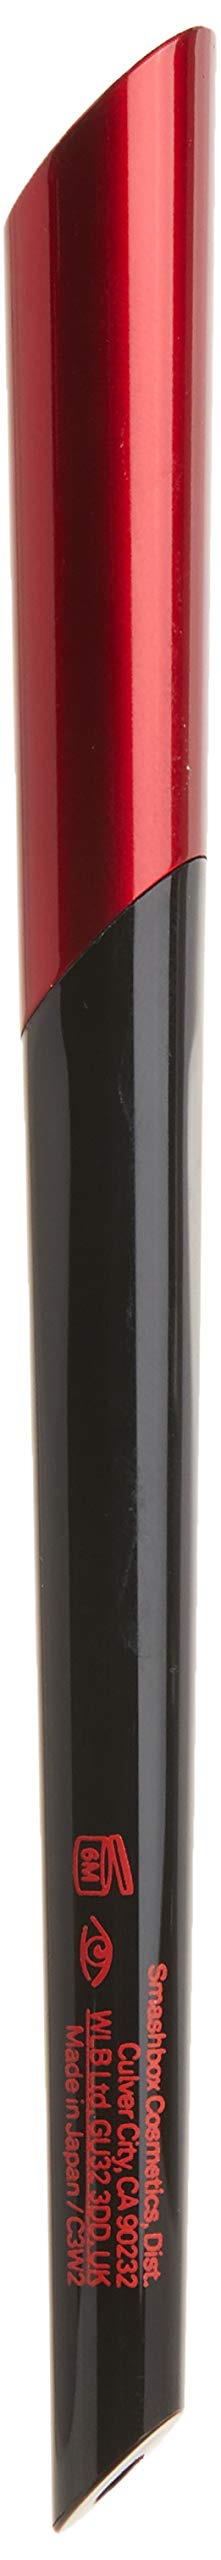 Smashbox 24-Hour Liquid Eye Liner With Ultra Fine Tip, Black, 0.02 Oz